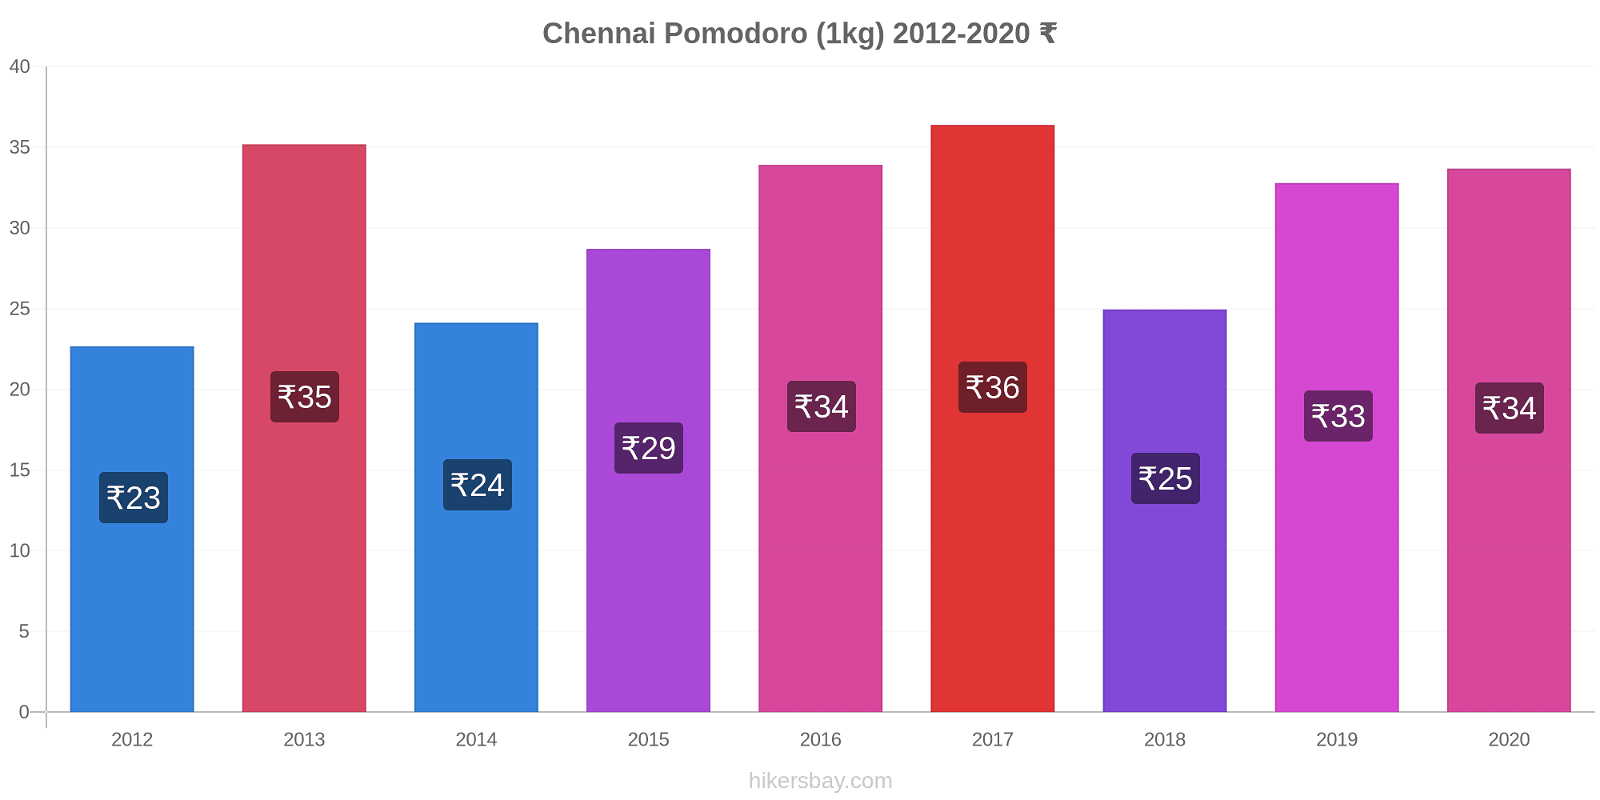 Chennai variazioni di prezzo Pomodoro (1kg) hikersbay.com